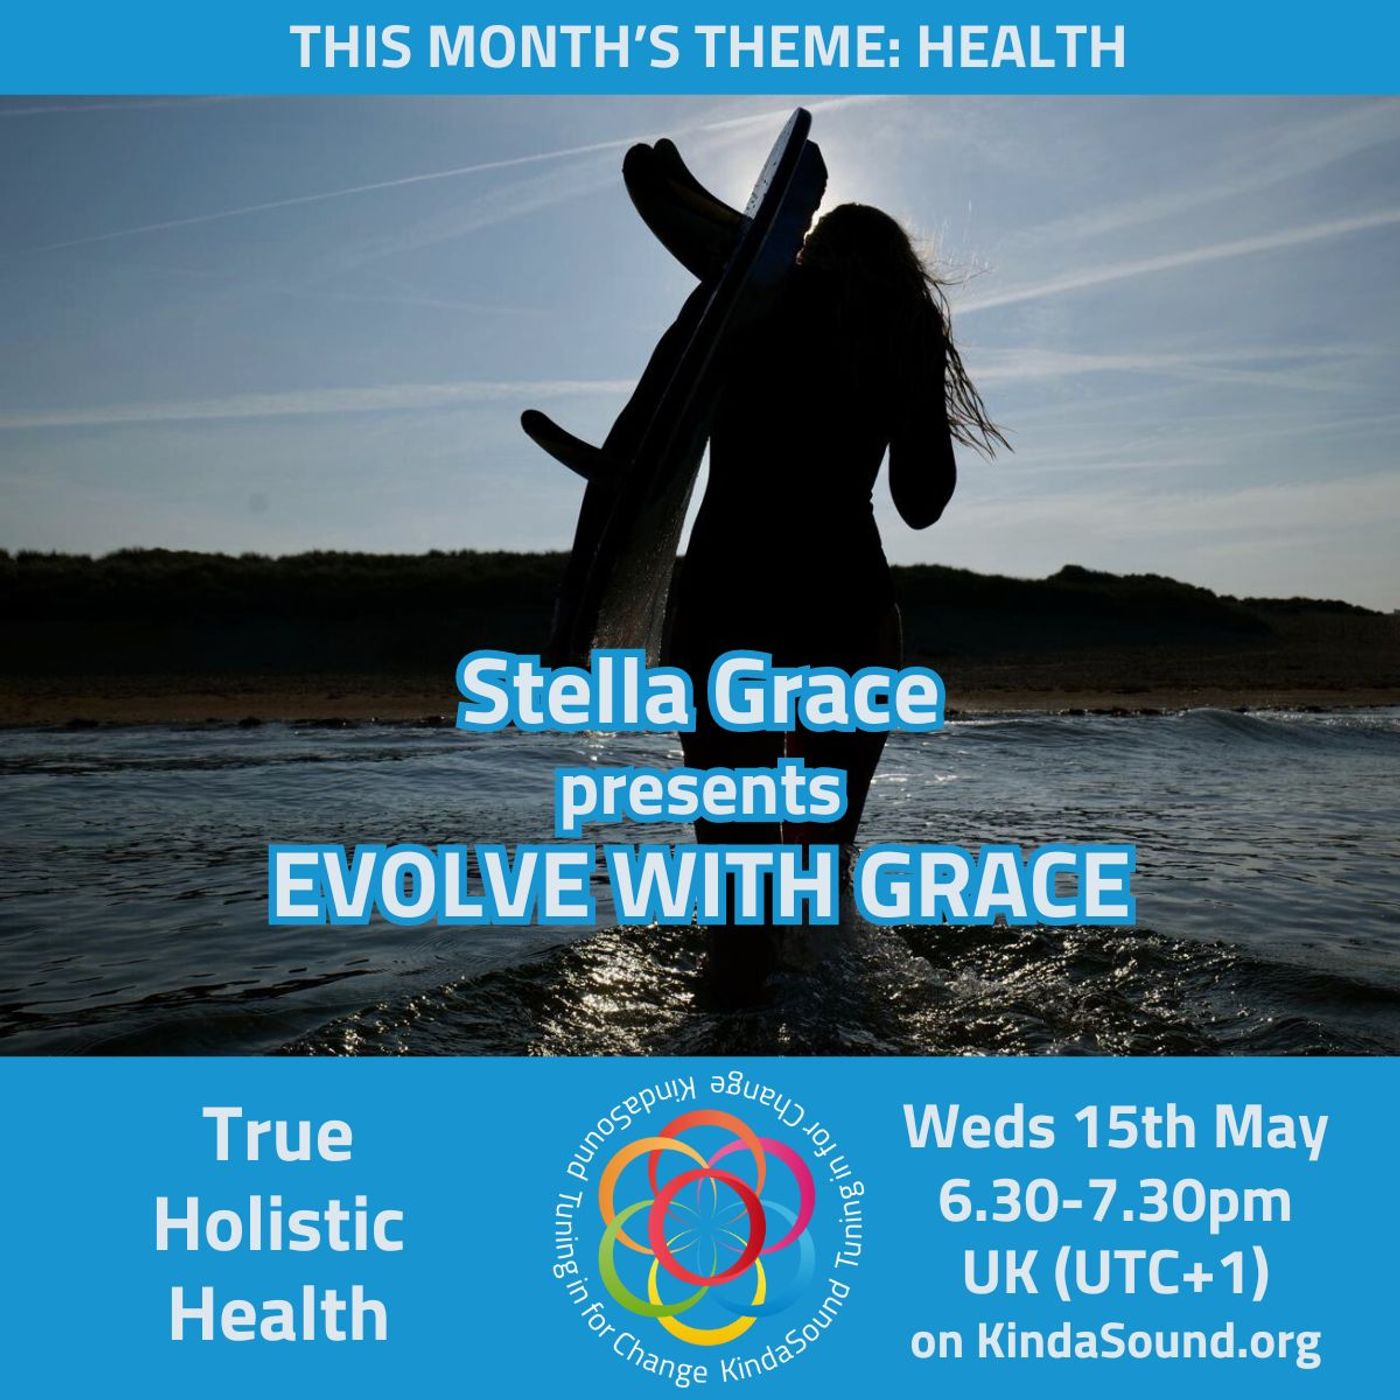 True Holistic Health | Stella Grace presents Evolve with Grace